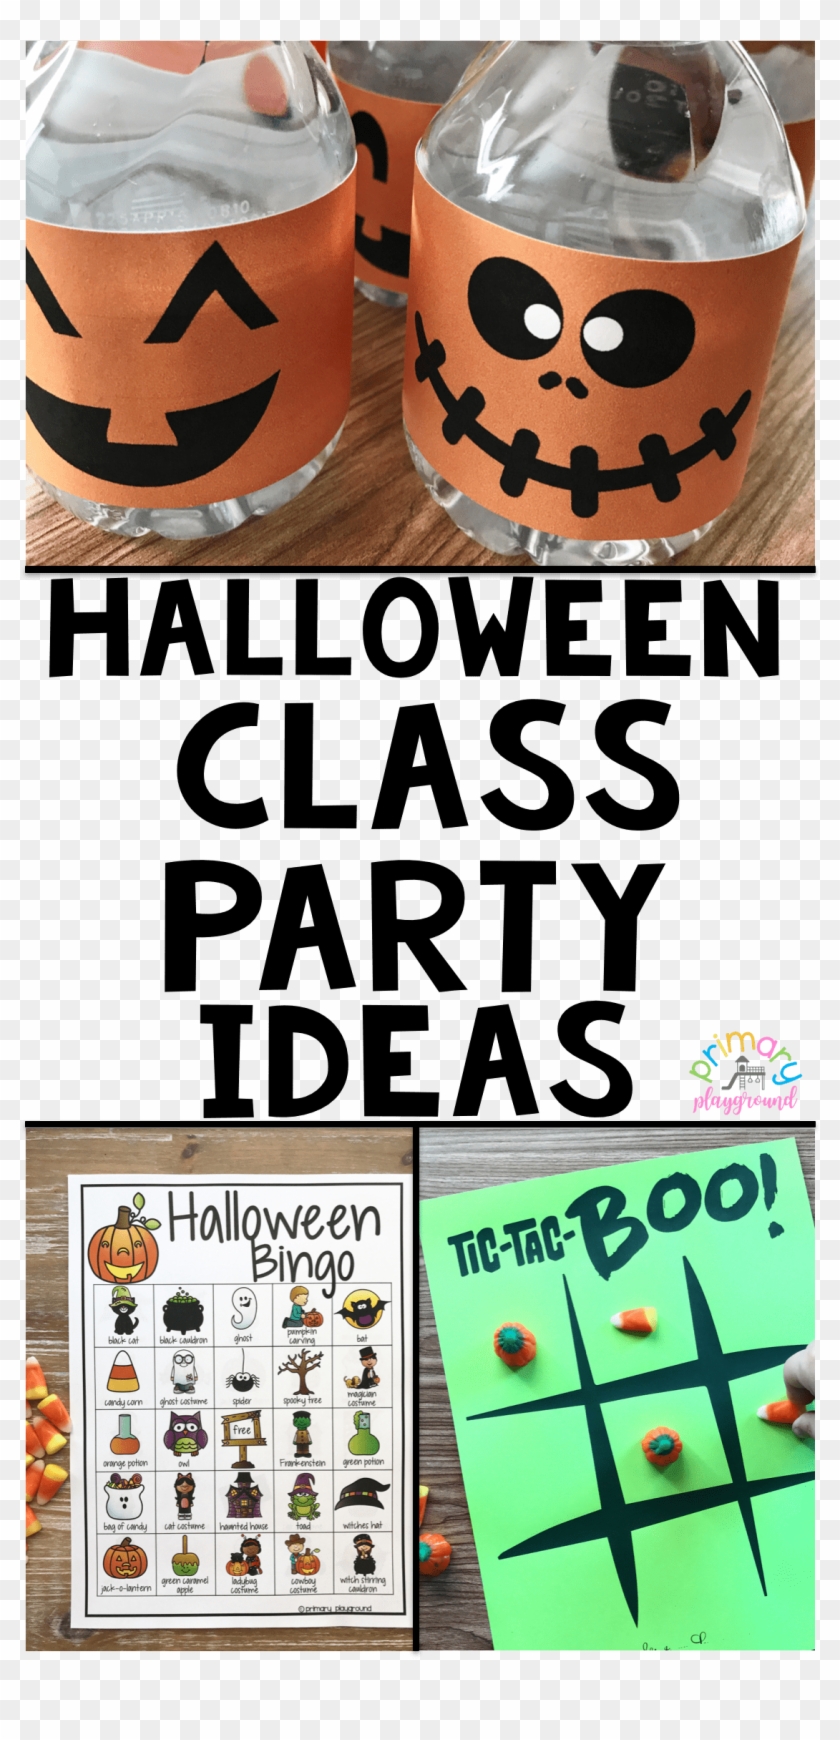 Halloween Class Party Ideas - Poster Clipart